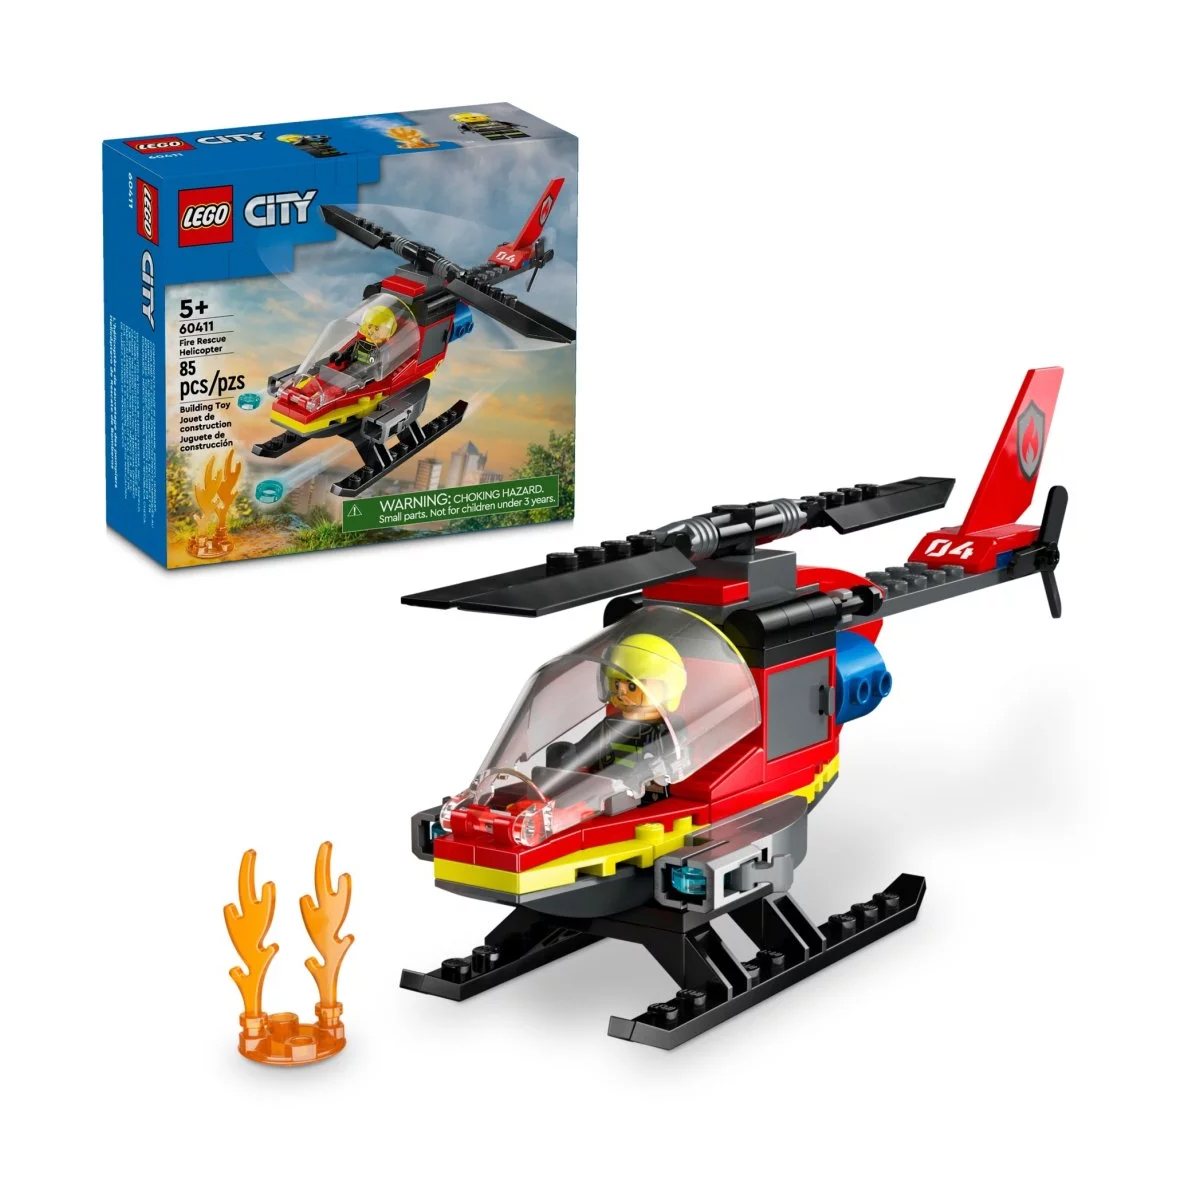 Конструктор Lego City Fire Rescue Helicopter 60411, 85 деталей конструктор lego city fire rescue motorcycle 60410 57 деталей